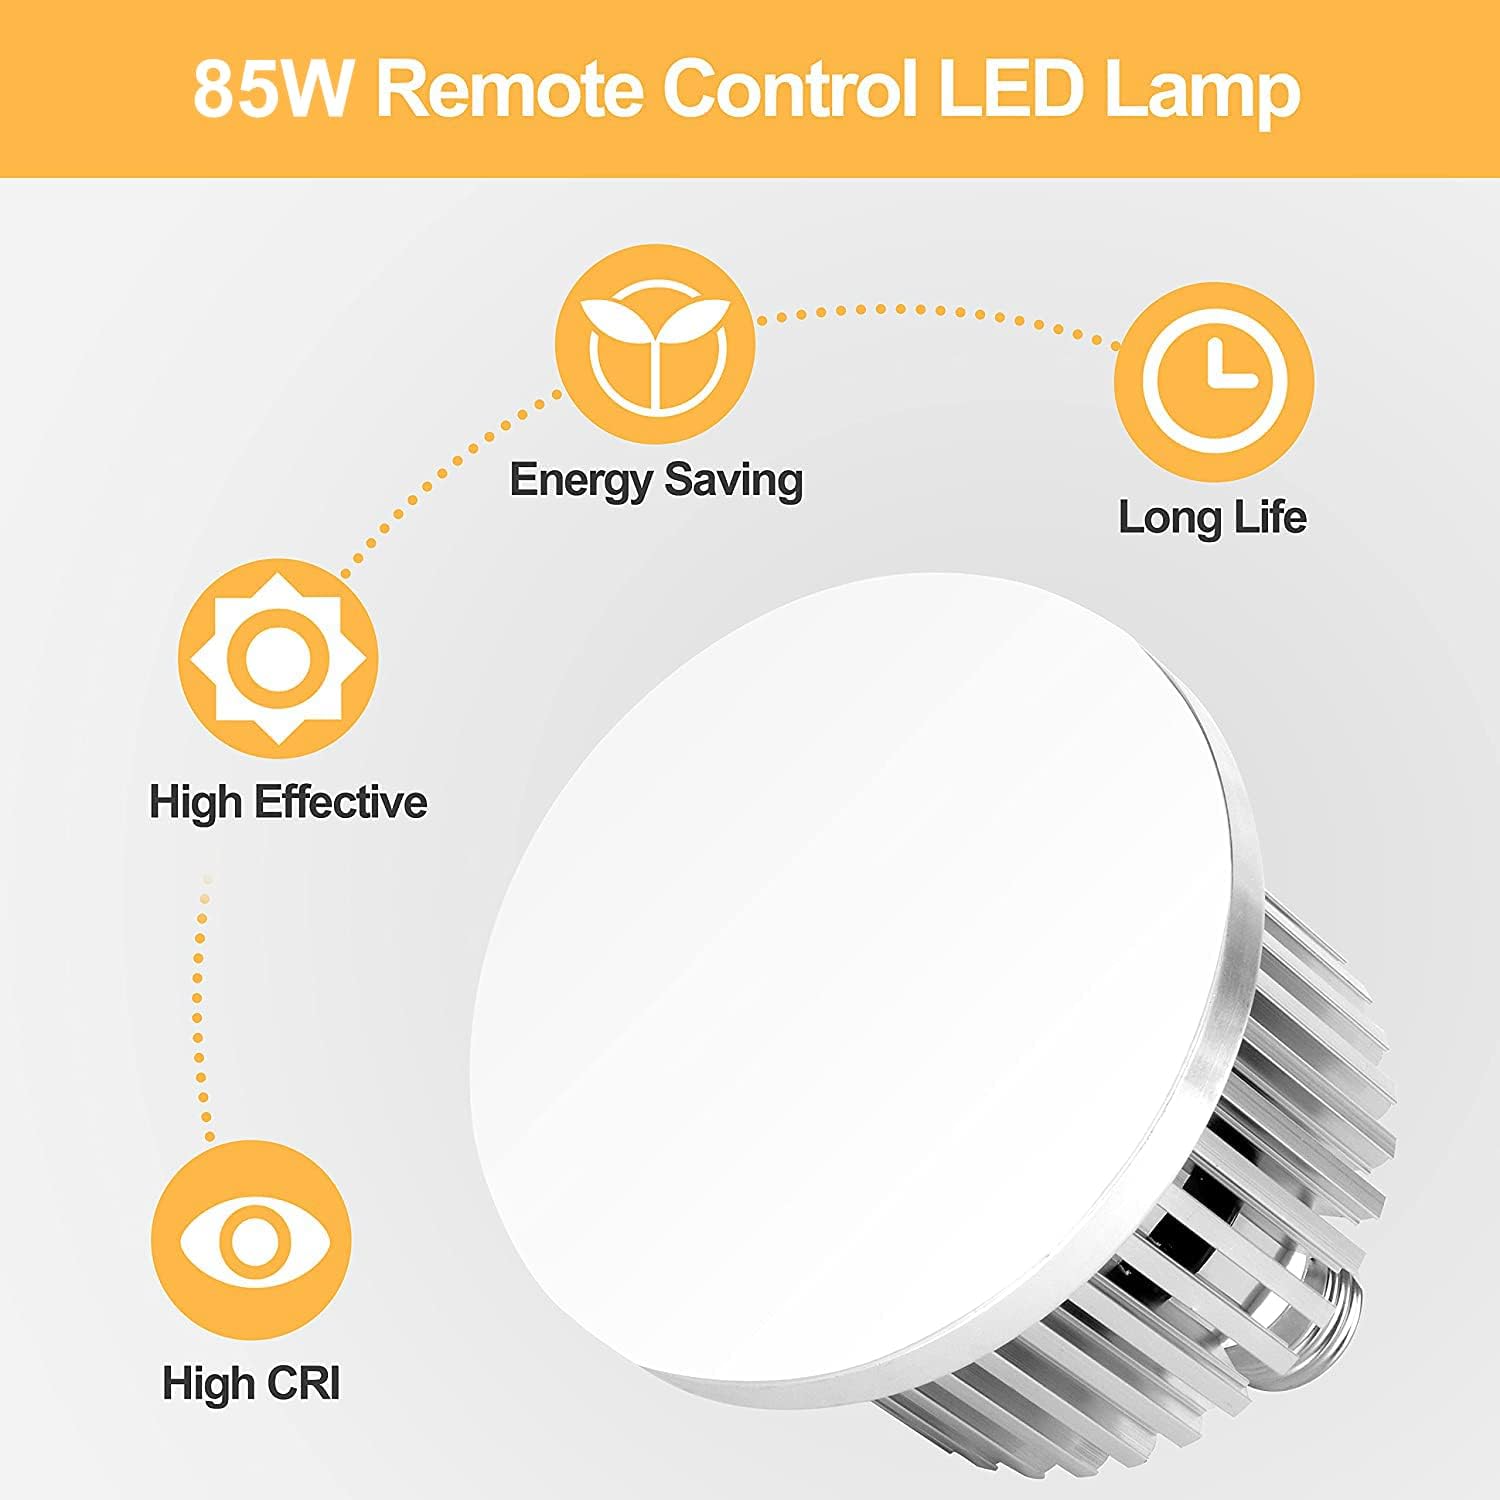 Professional Photography Remote Control LED Light Bulb - 2 pcs